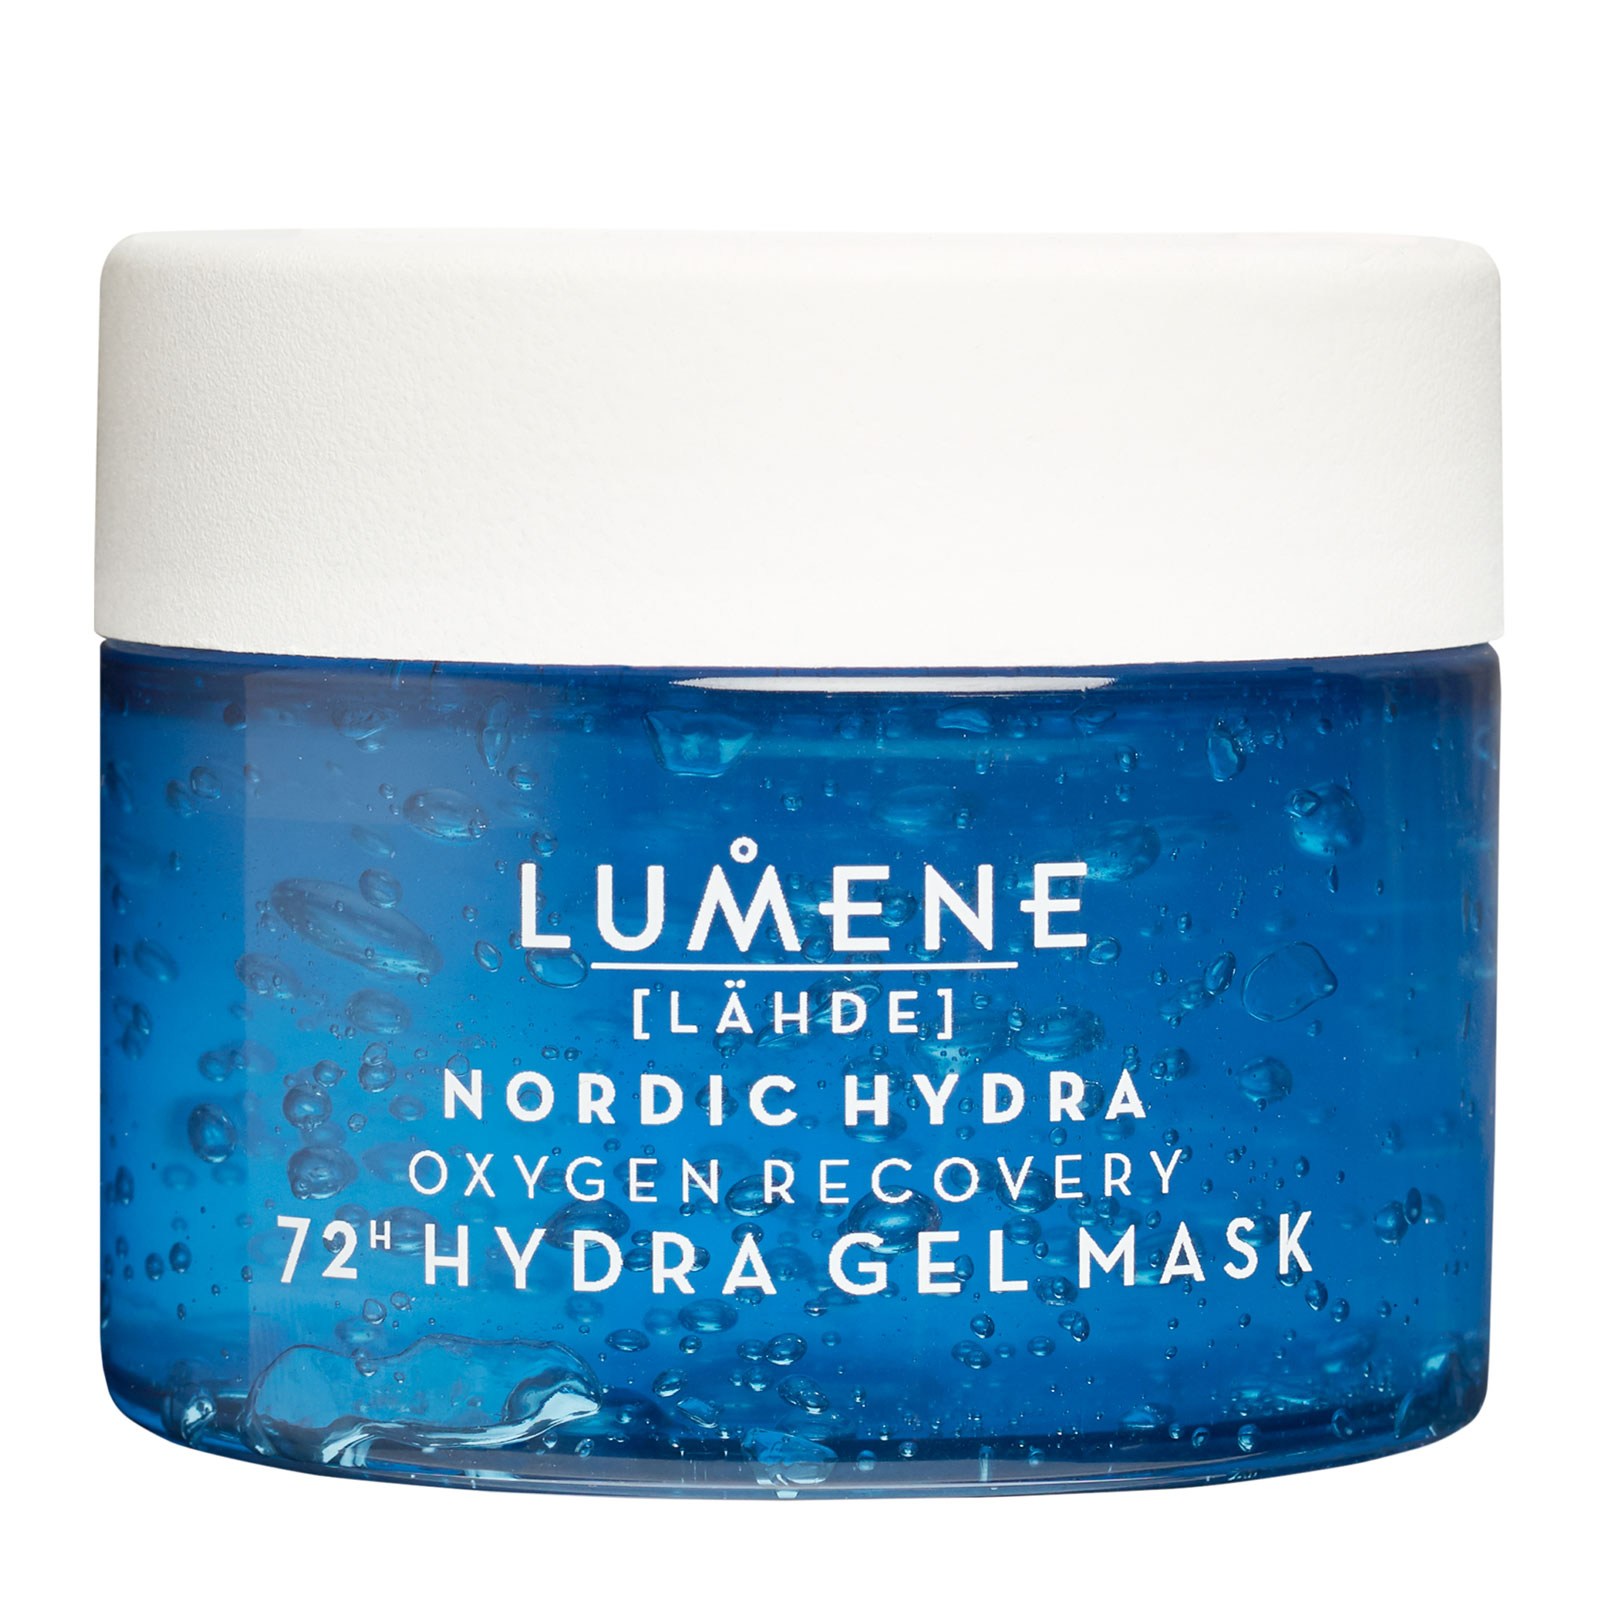 Lumene Nordic Hydra [Lahde] Oxygen Recovery 72H Hydra Gel Mask 150Ml